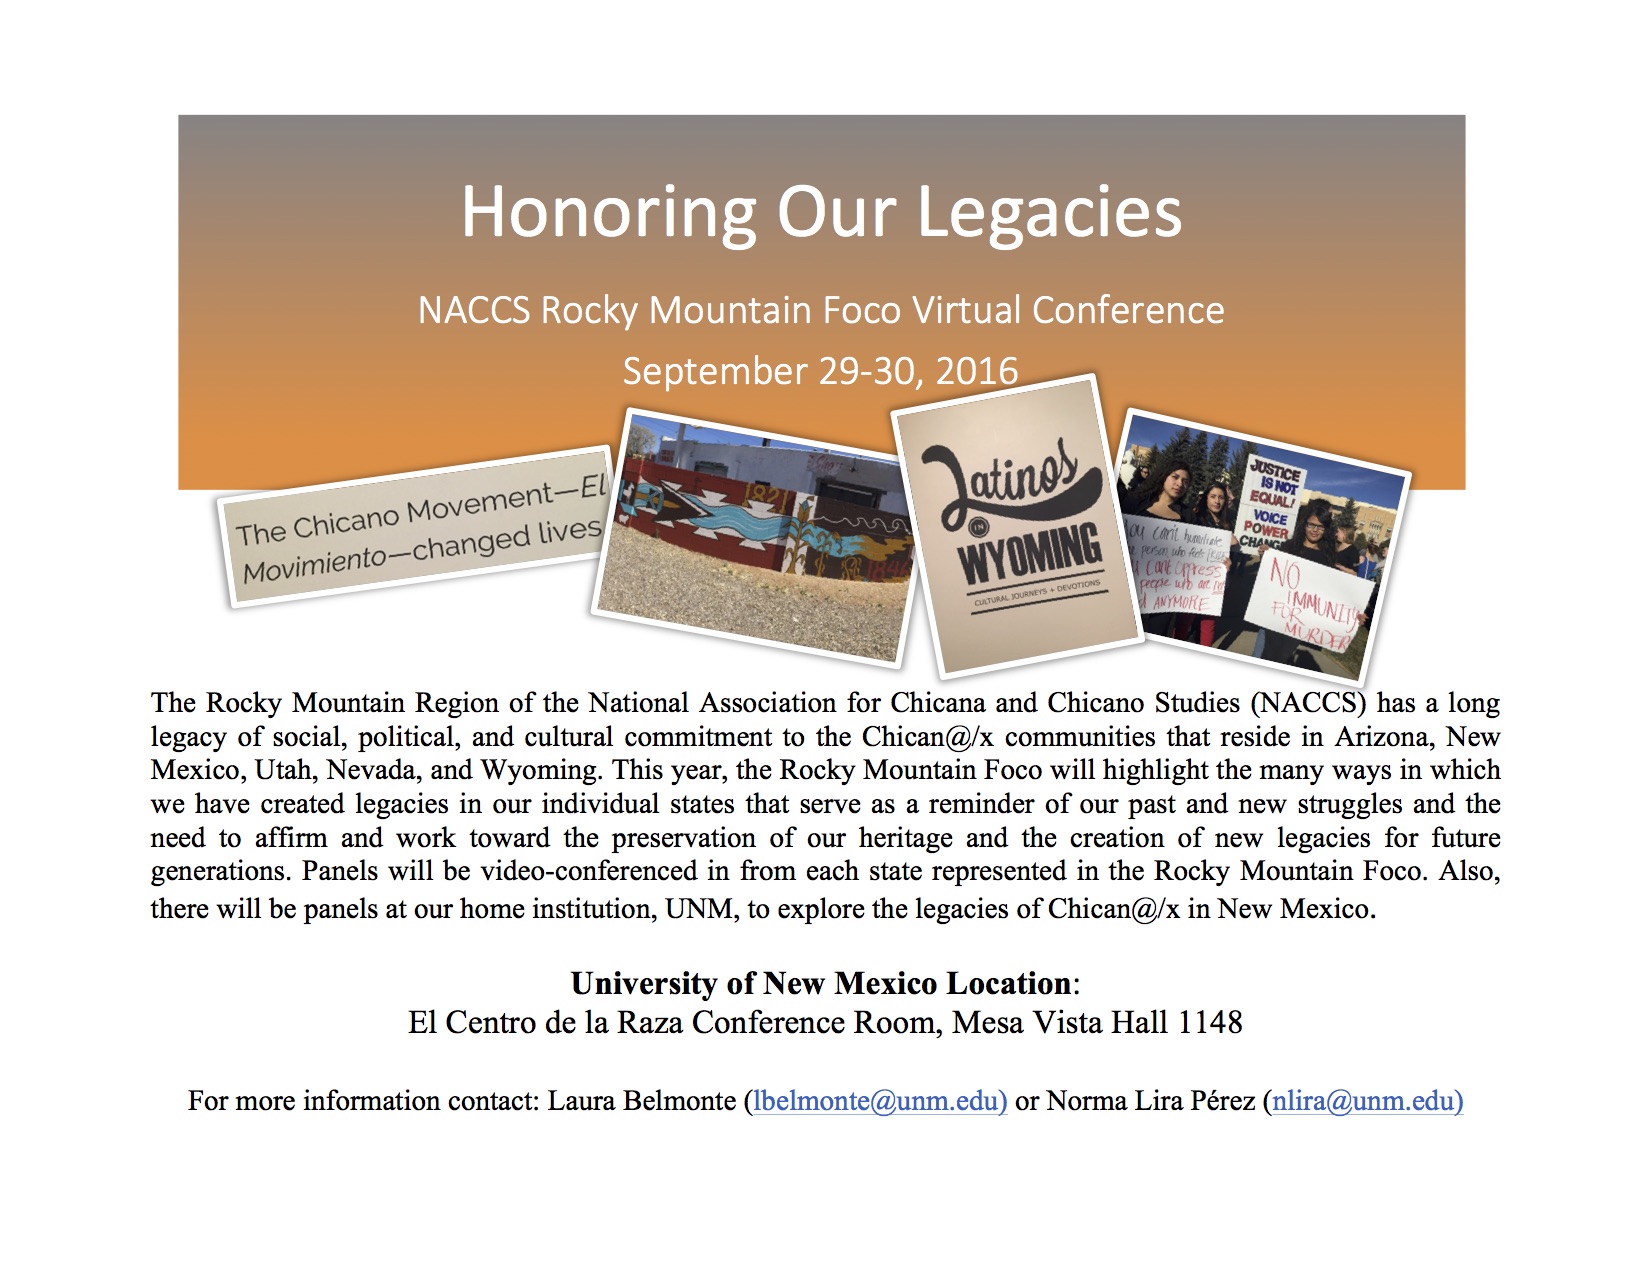 "Honoring our Legacies" Flyer